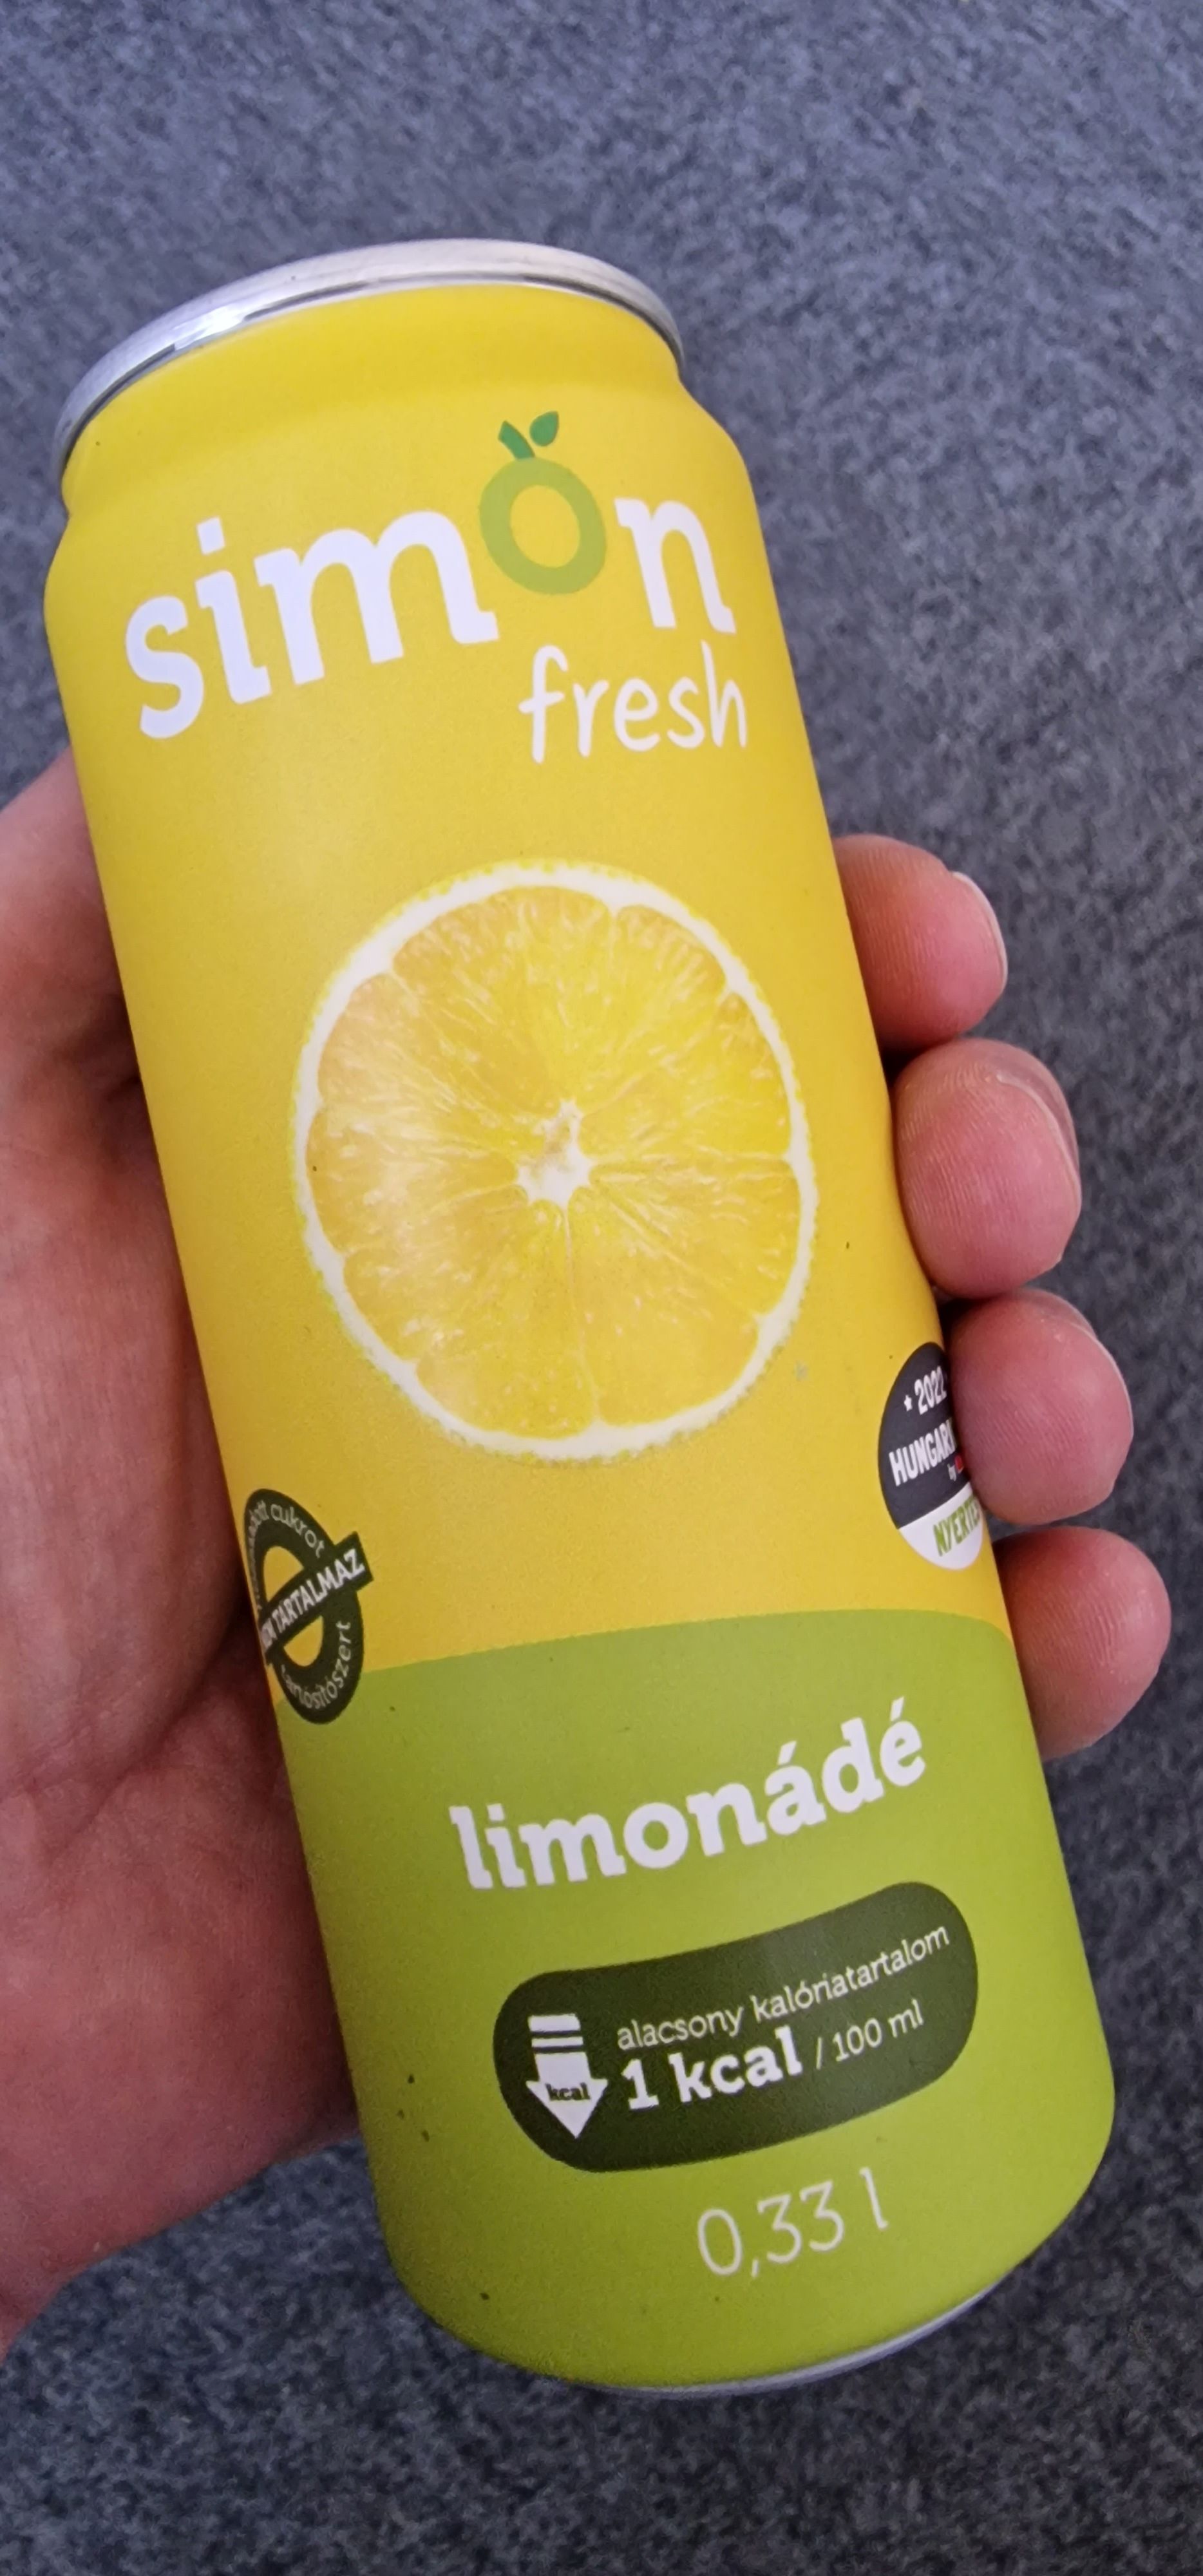 Simon fresh limonádé